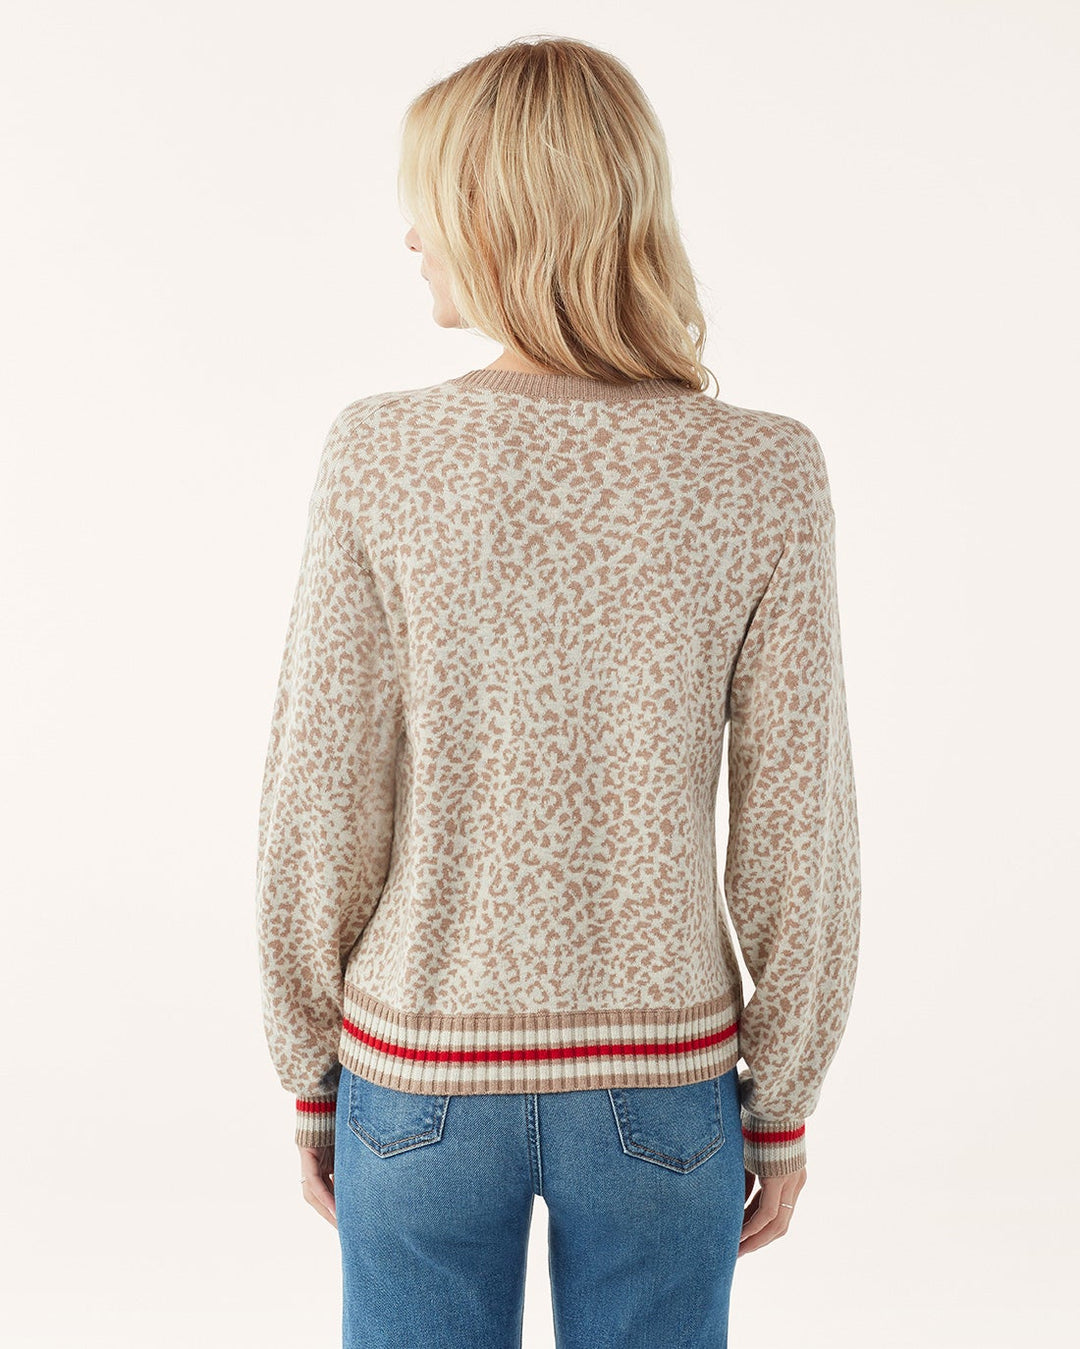 Splendid - Leopard Pullover Sweater in Camel Hot